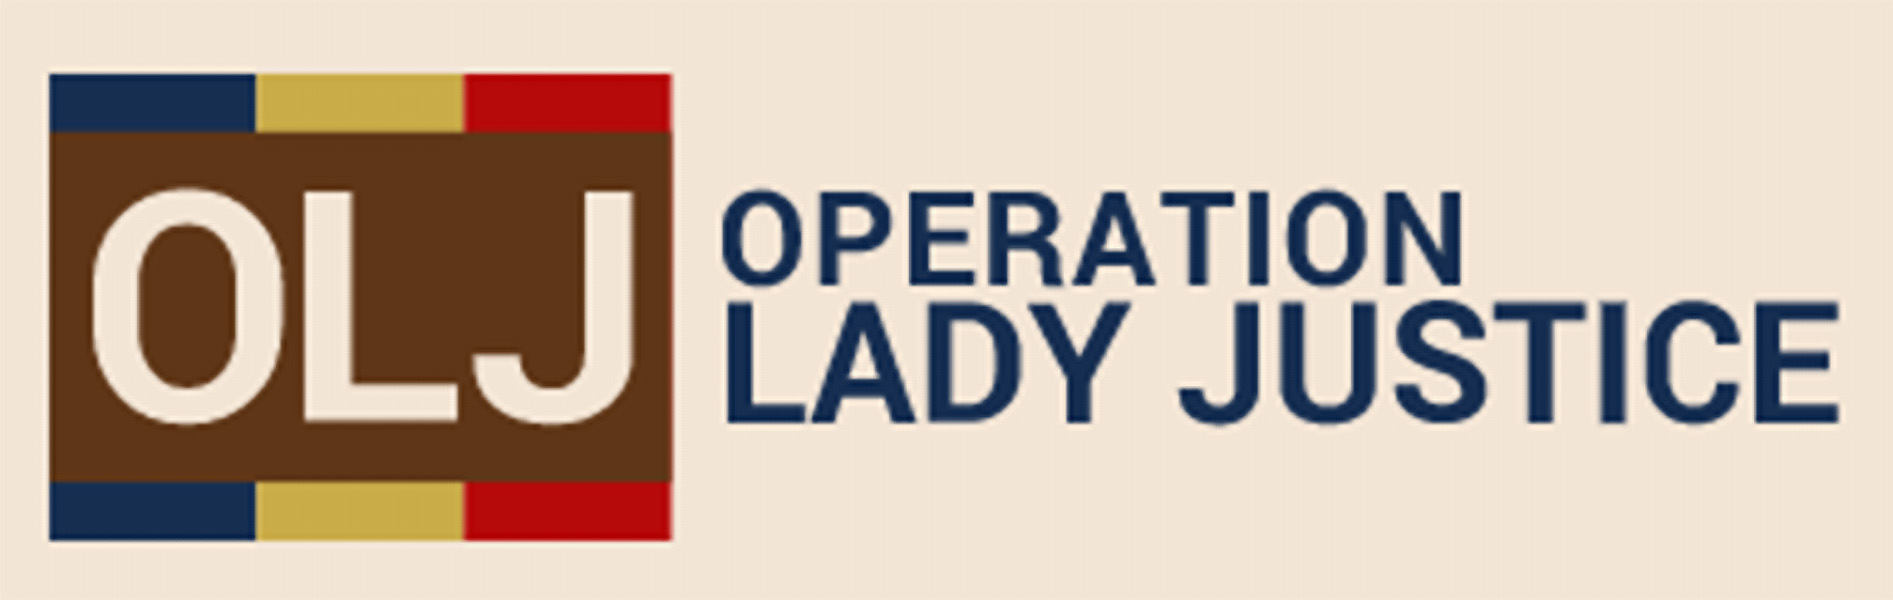 Operation Lady Justice logo